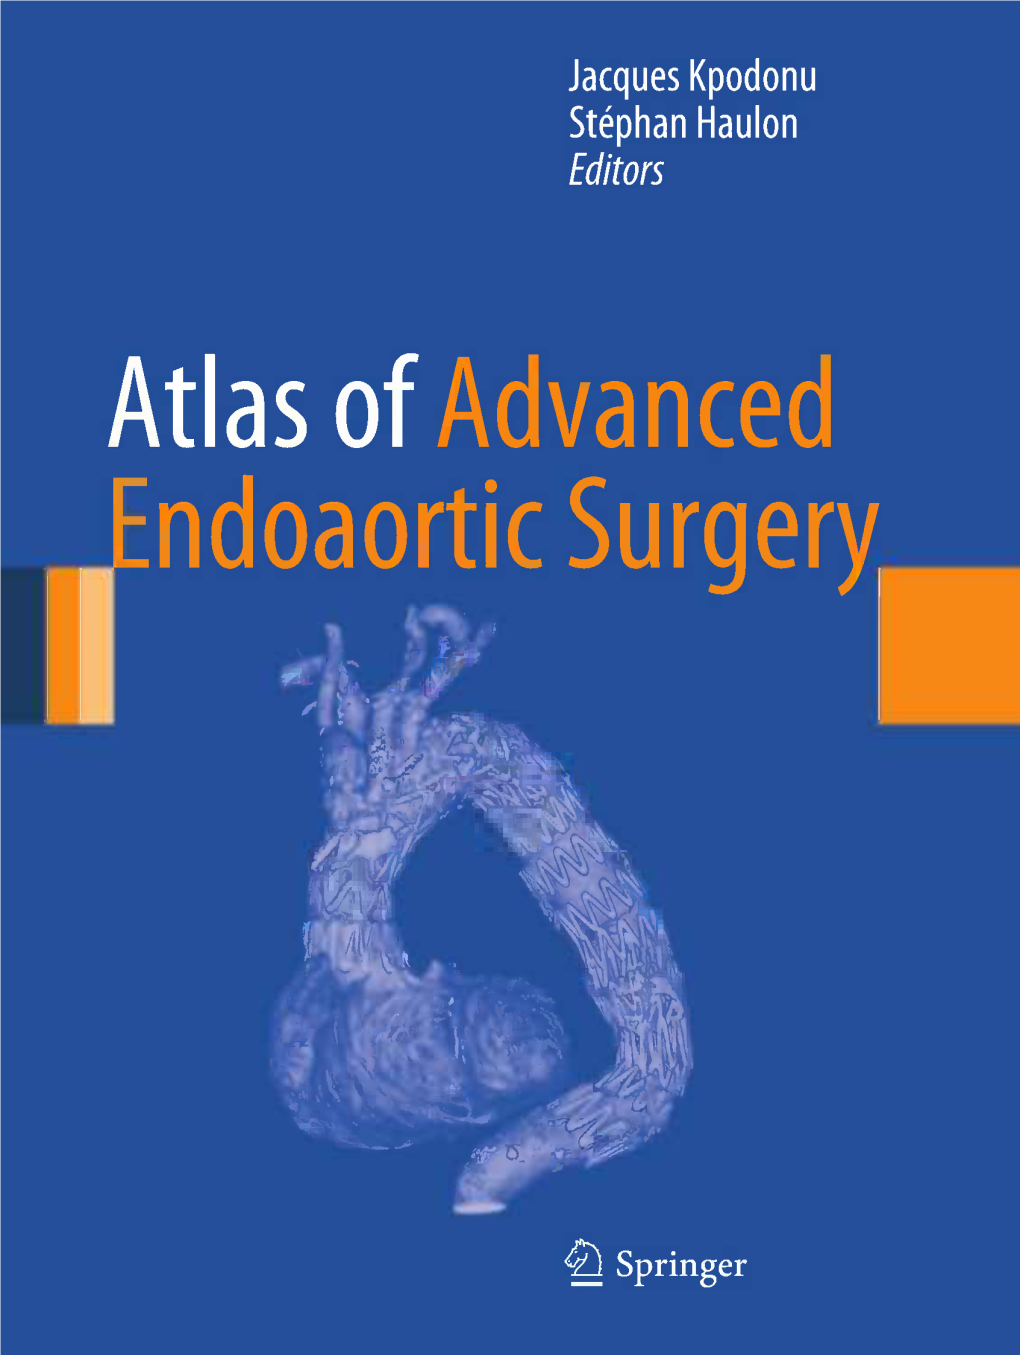 Atlas of Advance Endoaortic Spine Surgery.Pdf